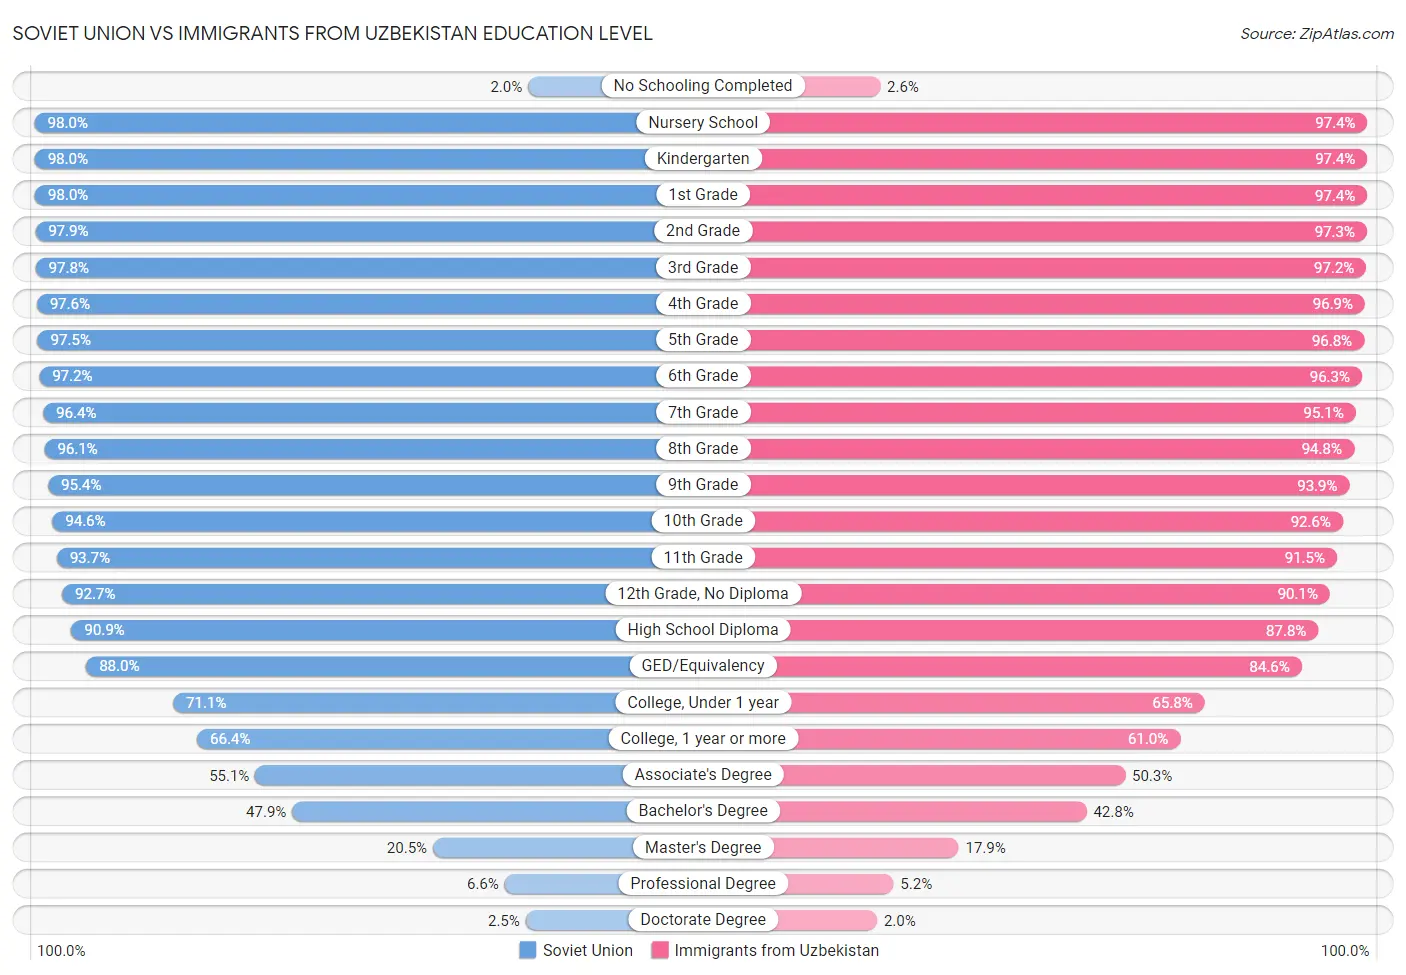 Soviet Union vs Immigrants from Uzbekistan Education Level